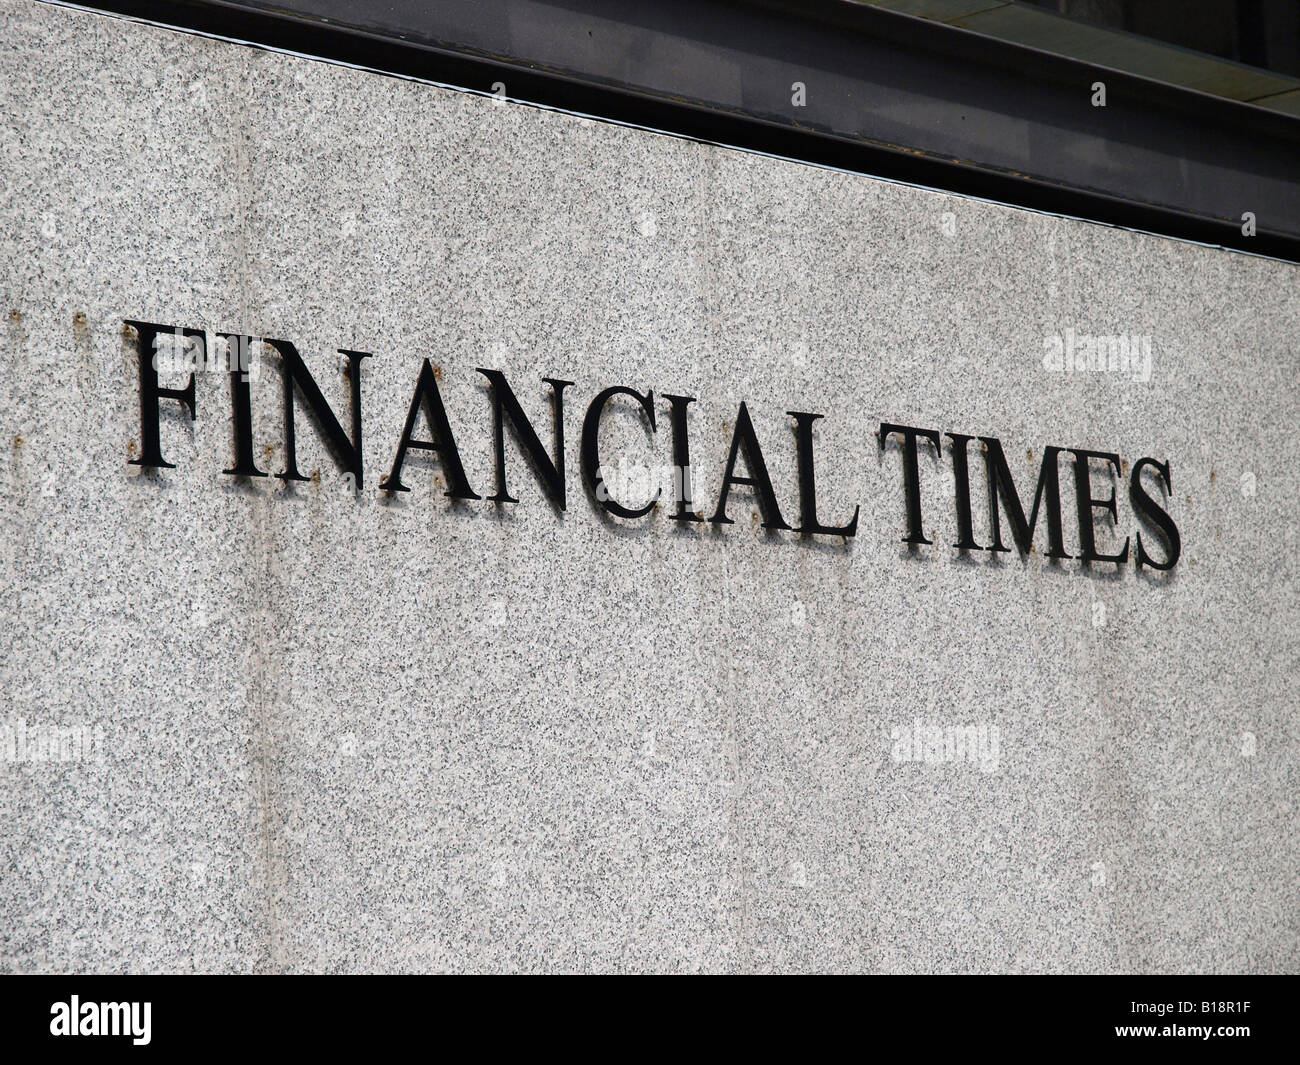 Financial times 1 Southwark Bridge Road London SE1 9HL England UK Stockfoto